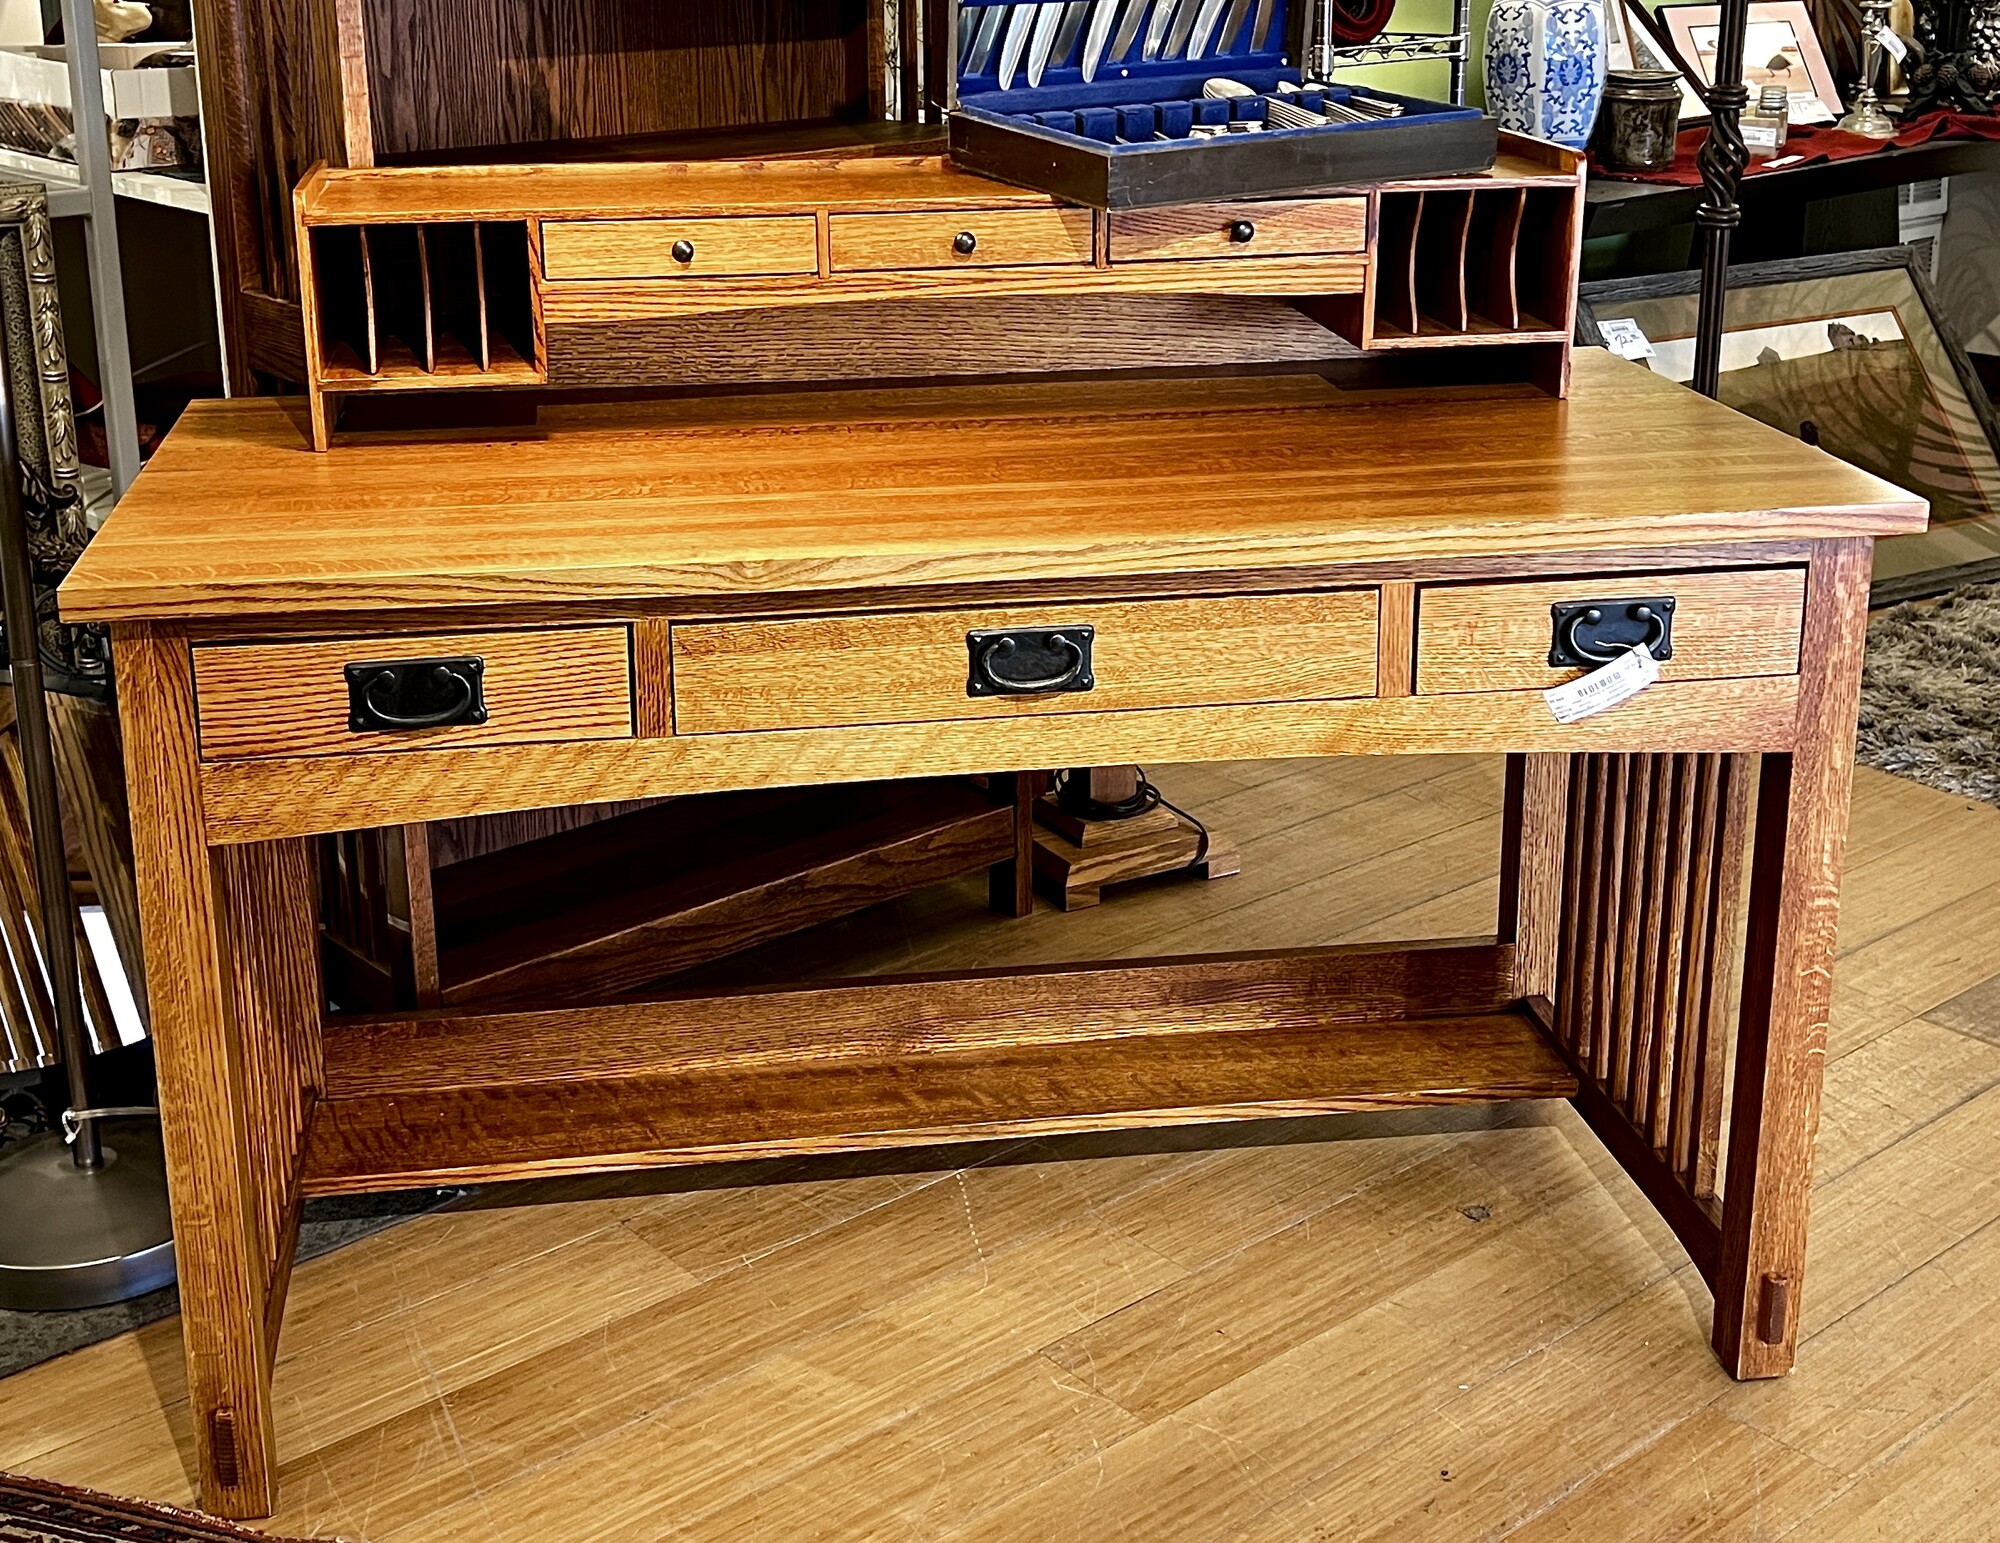 Desk/Hutch Royal Craftsman,
Size: 53x25x39